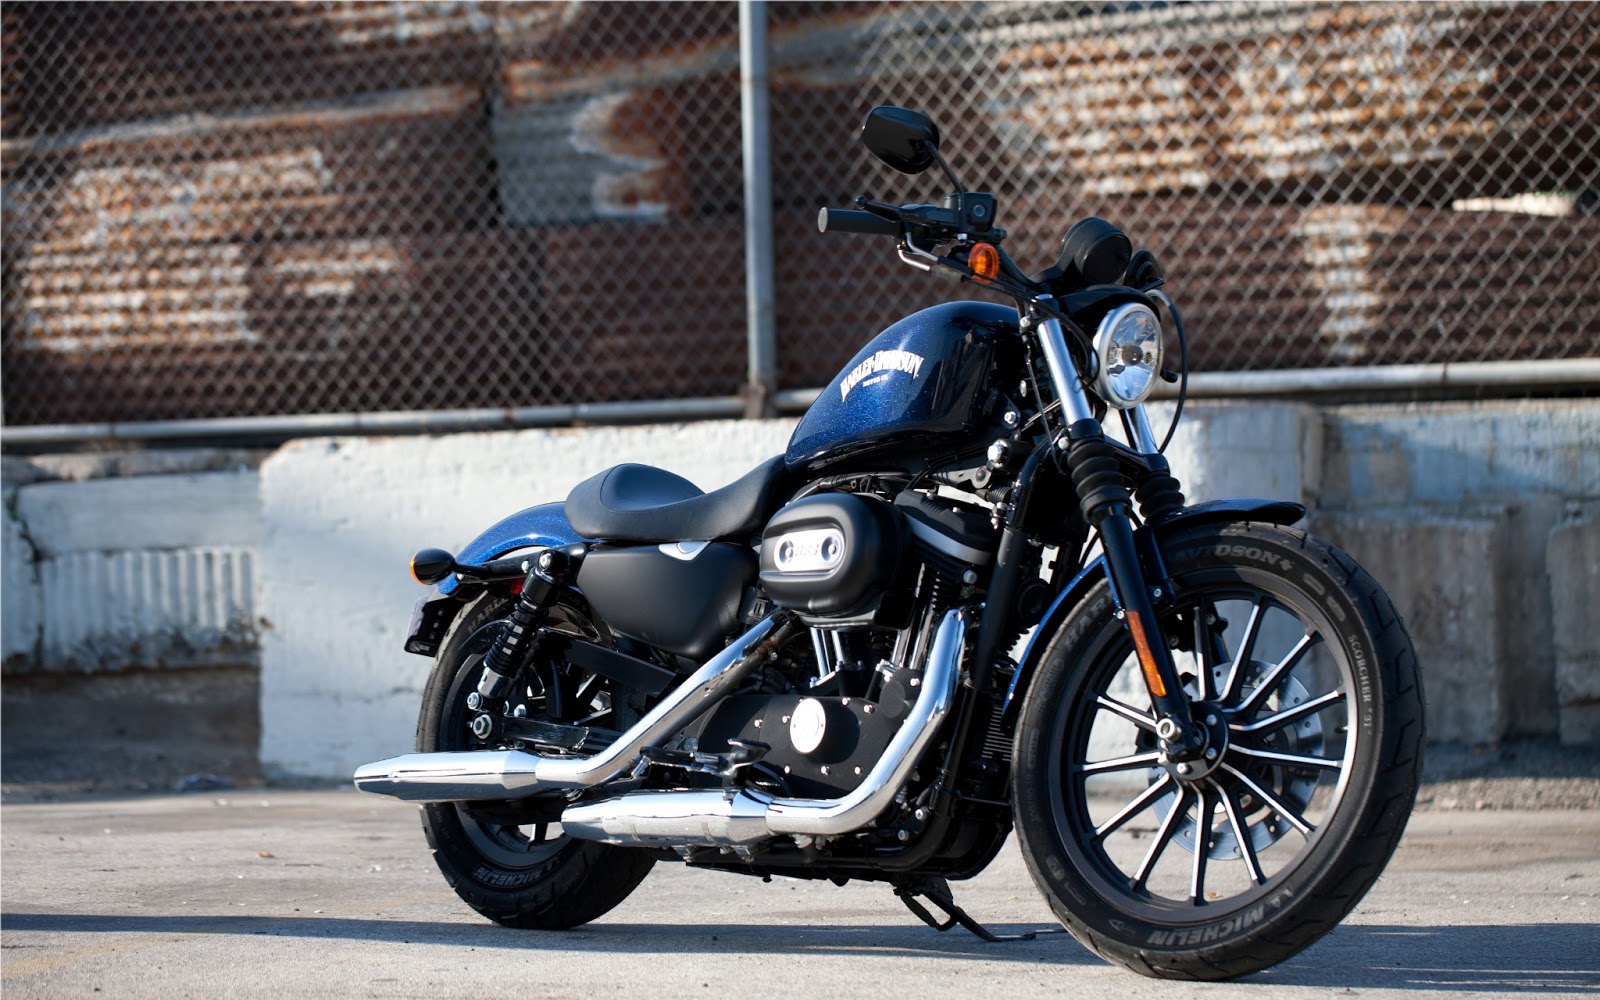 Harley Davidson Iron 883 Price In Chennai Promotion Off53